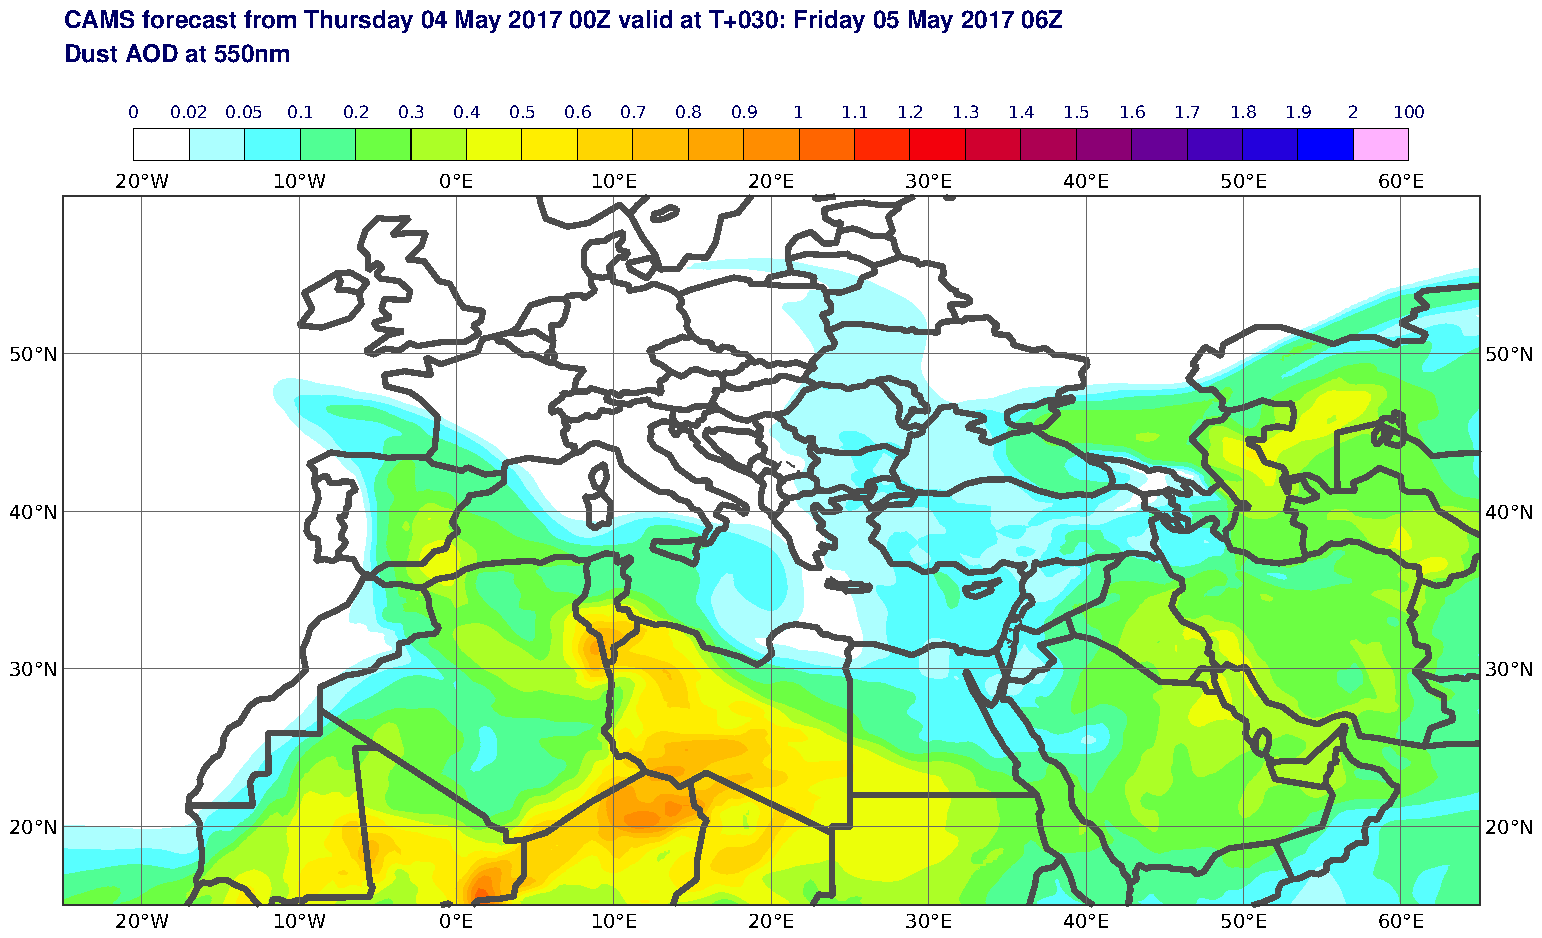 Dust AOD at 550nm valid at T30 - 2017-05-05 06:00